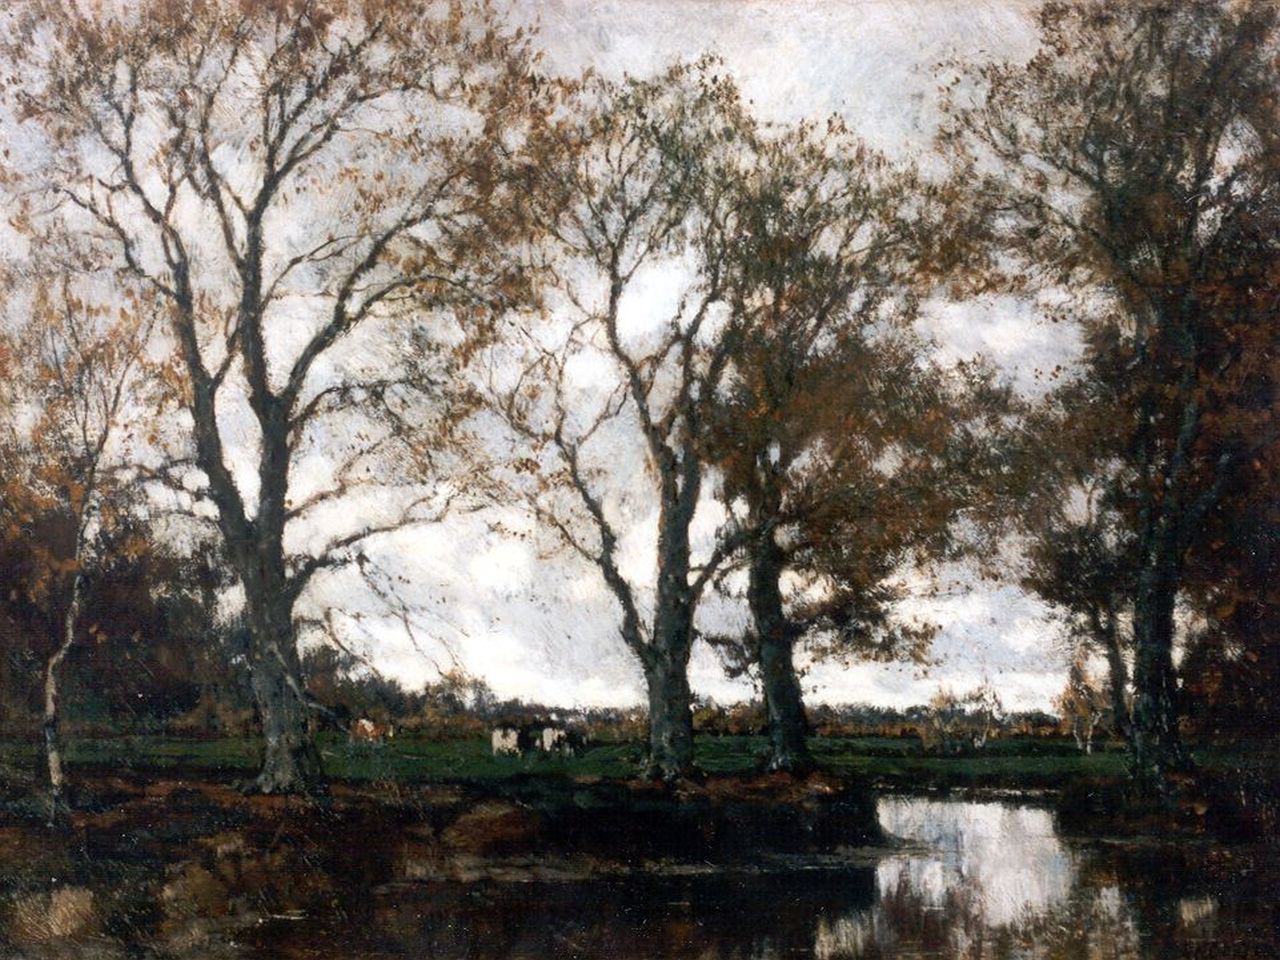 Gorter A.M.  | 'Arnold' Marc Gorter, Autumn landscape, oil on canvas 37.0 x 49.0 cm